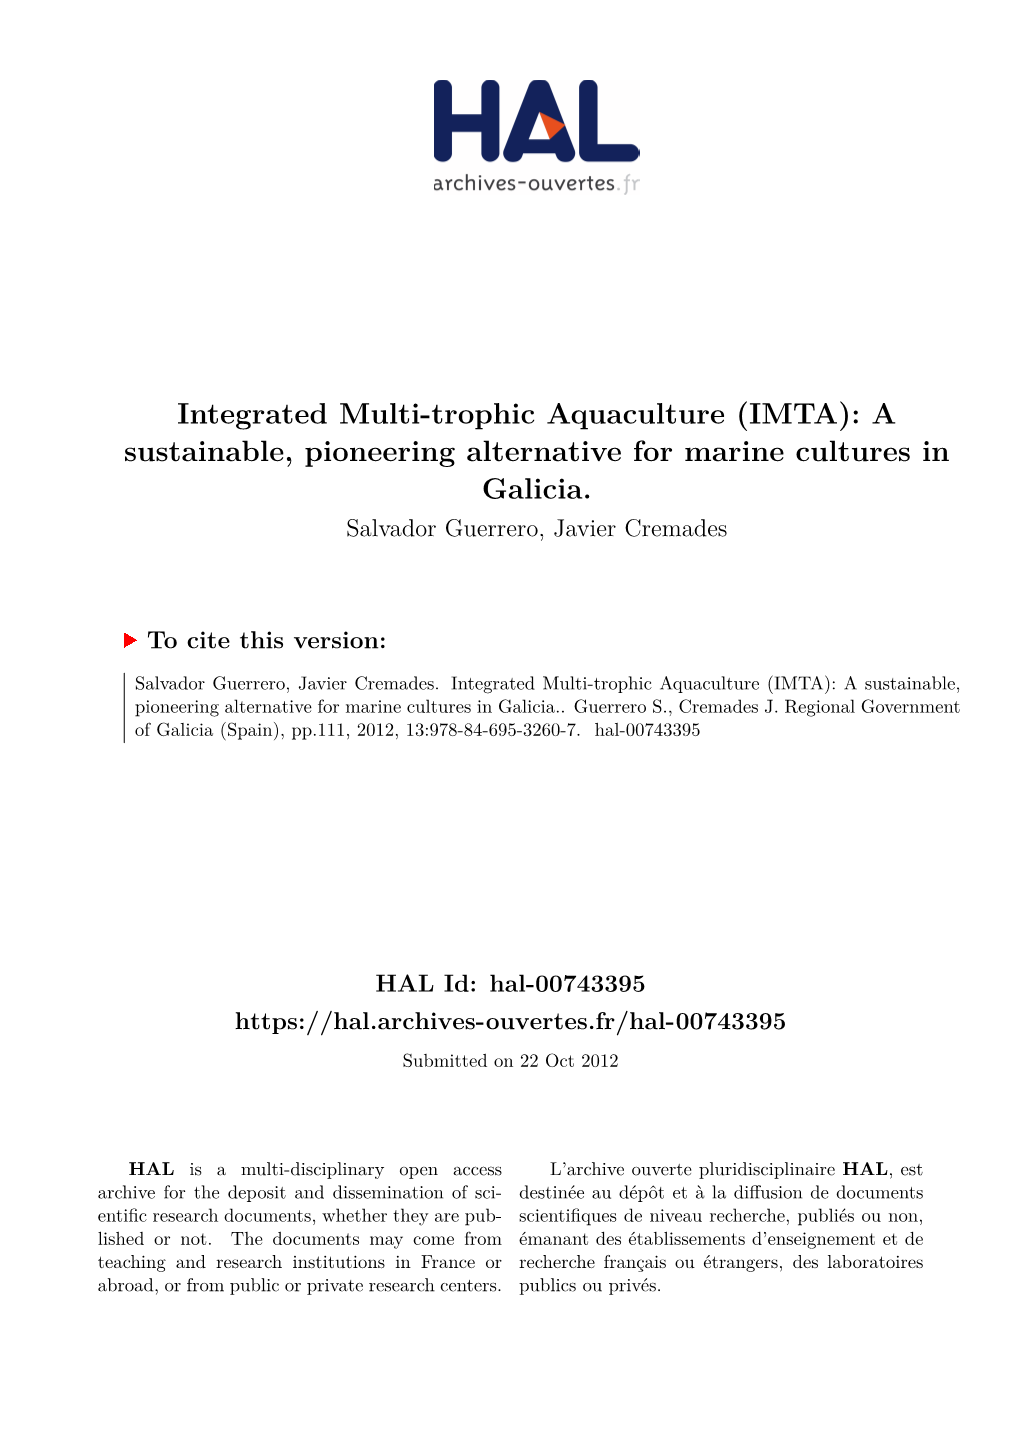 Integrated Multi-Trophic Aquaculture (IMTA): a Sustainable, Pioneering Alternative for Marine Cultures in Galicia